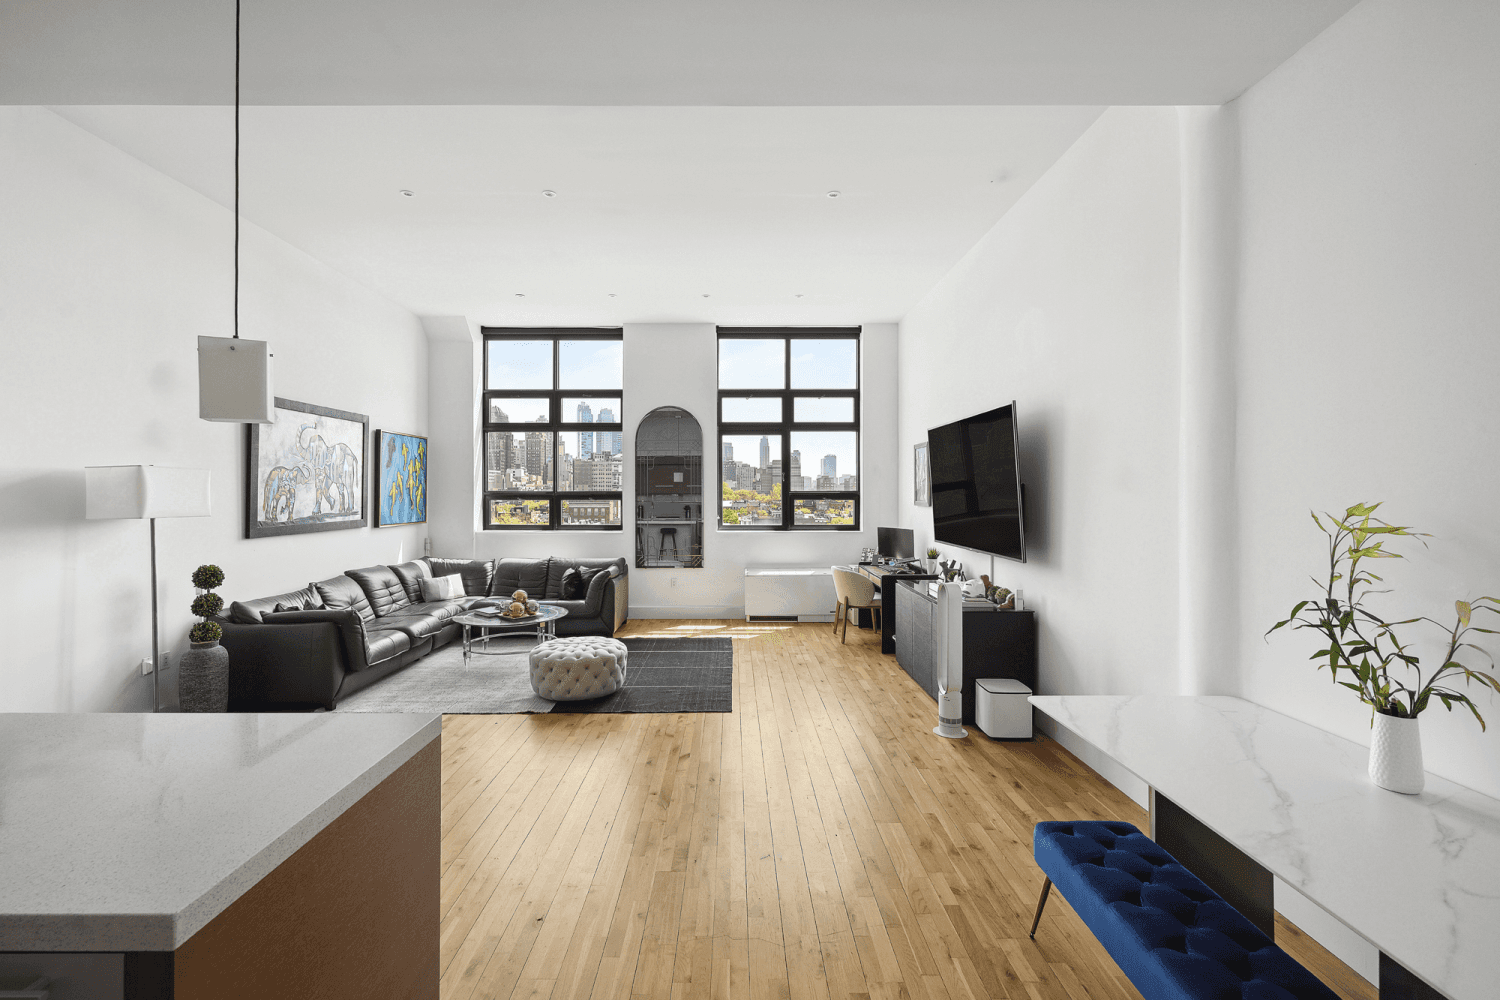 Presenting Apartment 911 at One Brooklyn Bridge Park one of Brooklyn Heights premier full service condominiums.